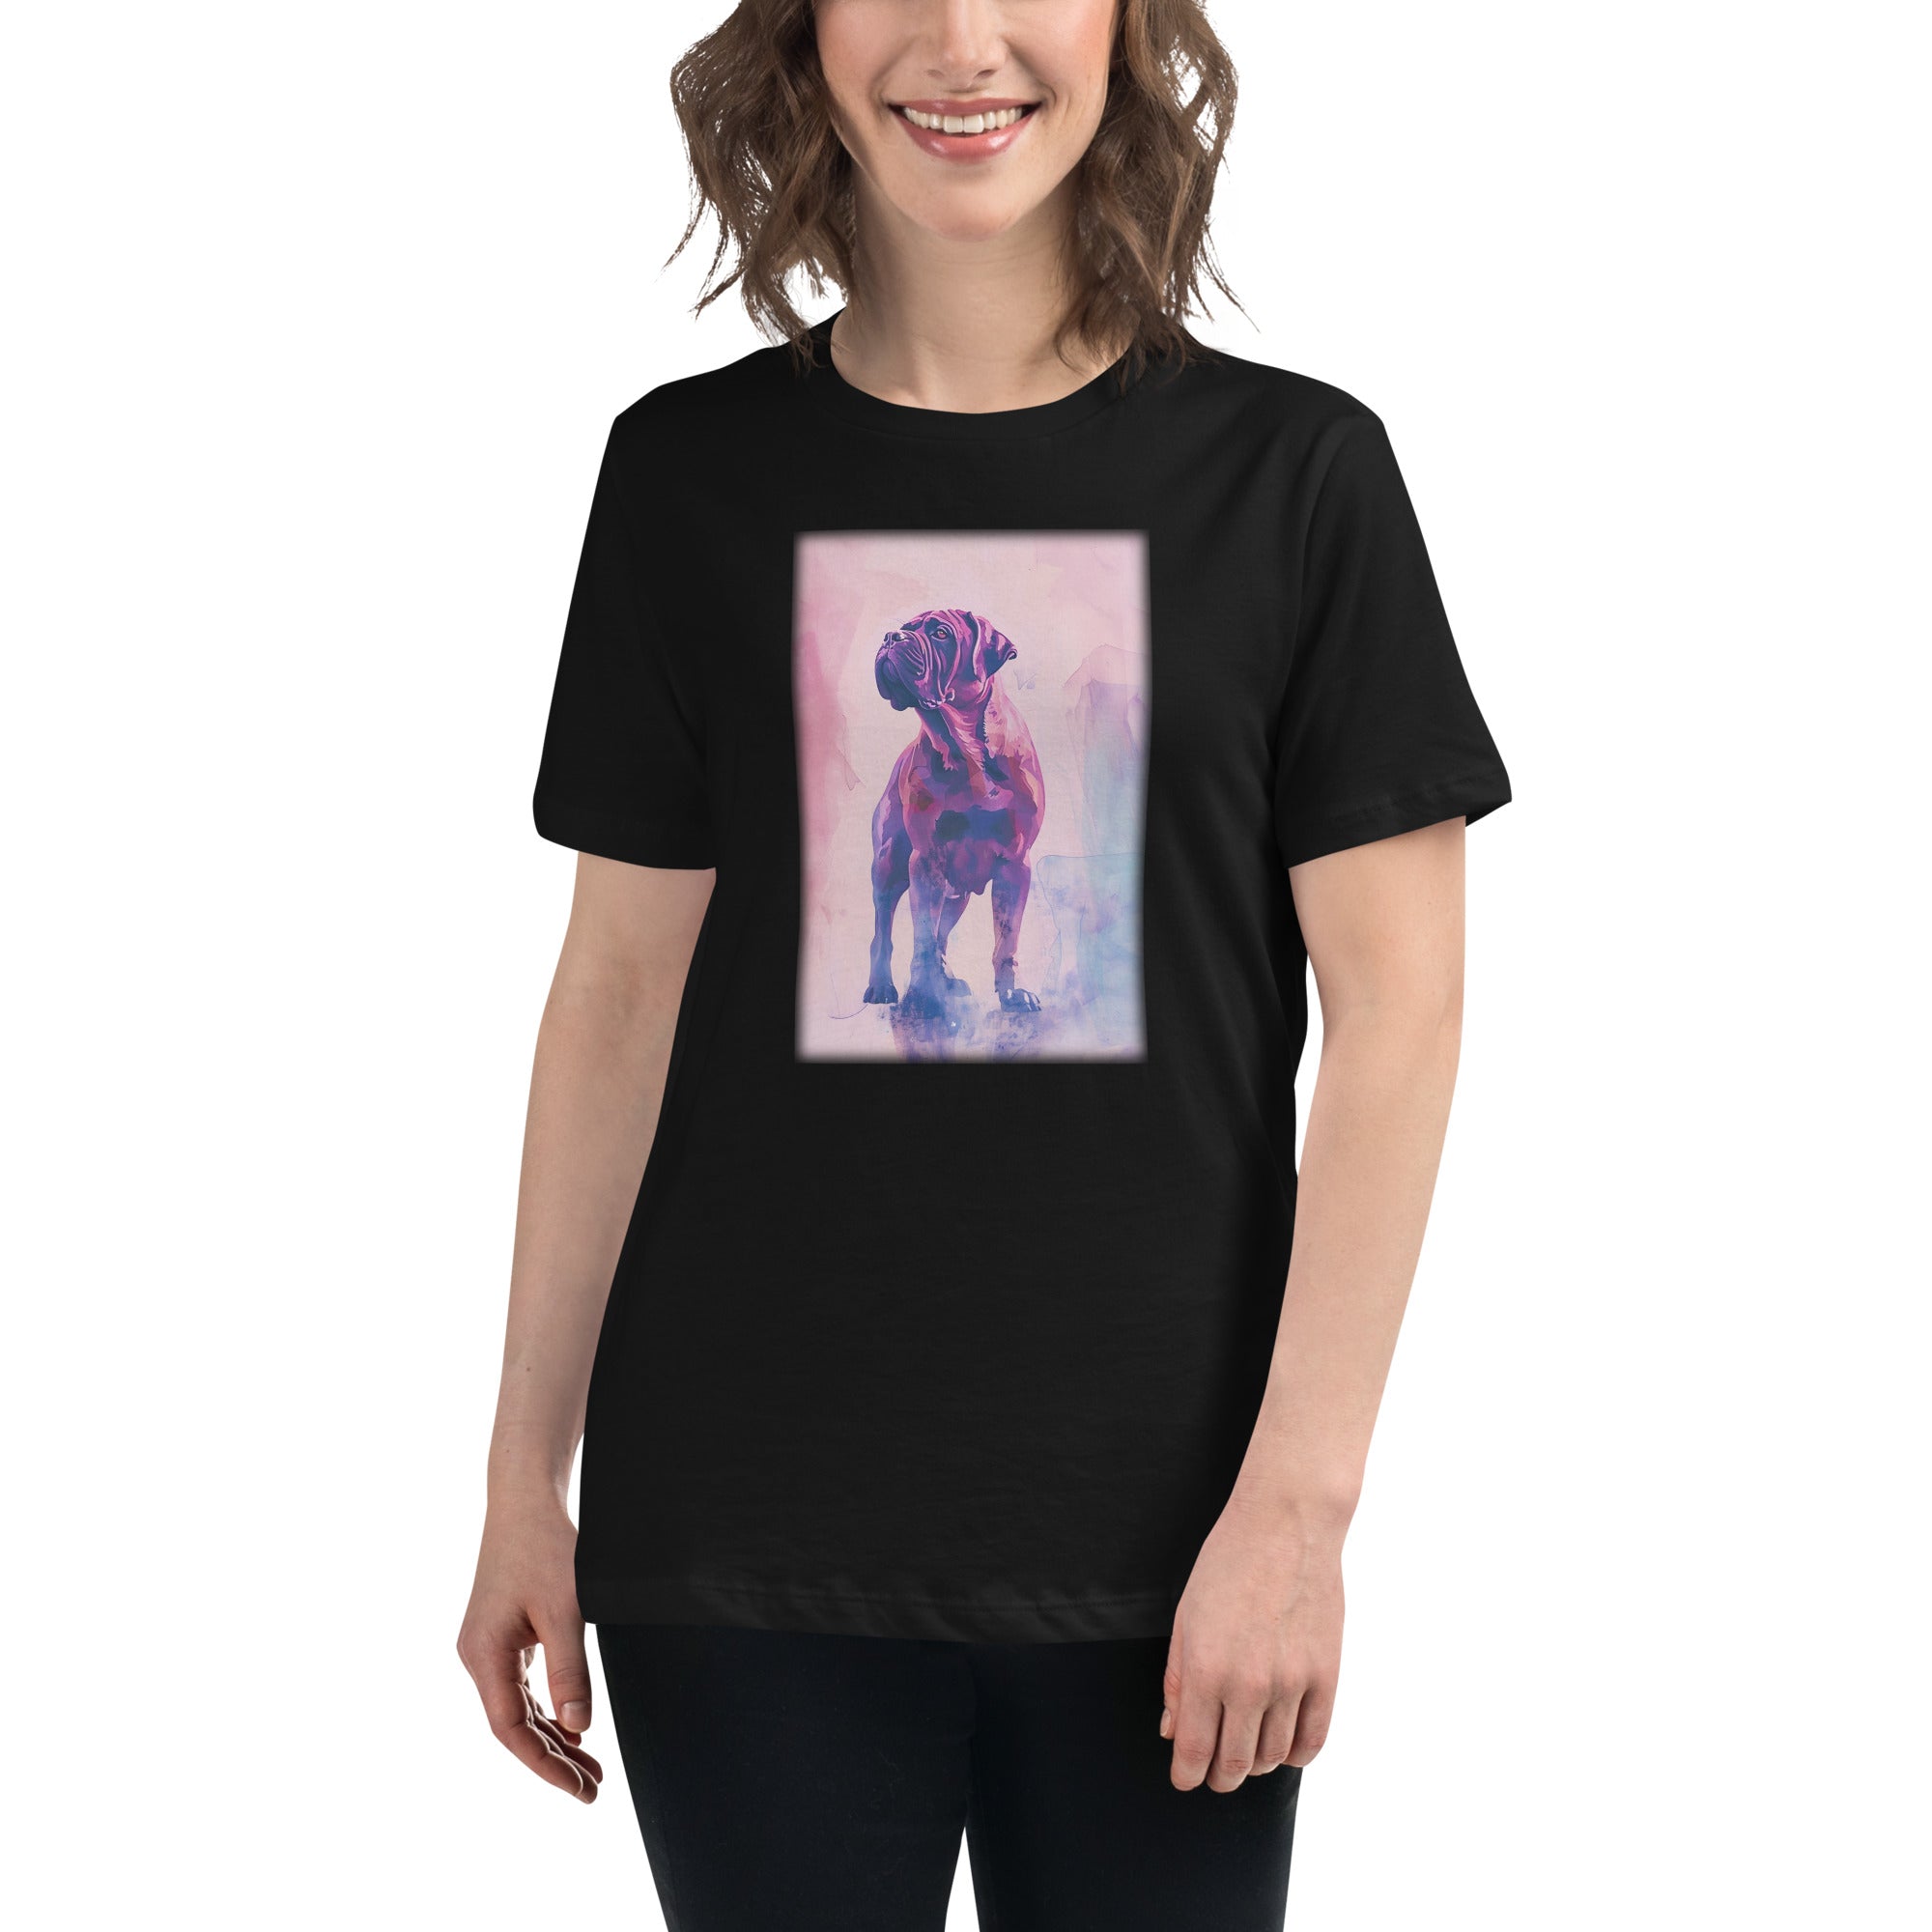 English Mastiff Women's Relaxed T-Shirt